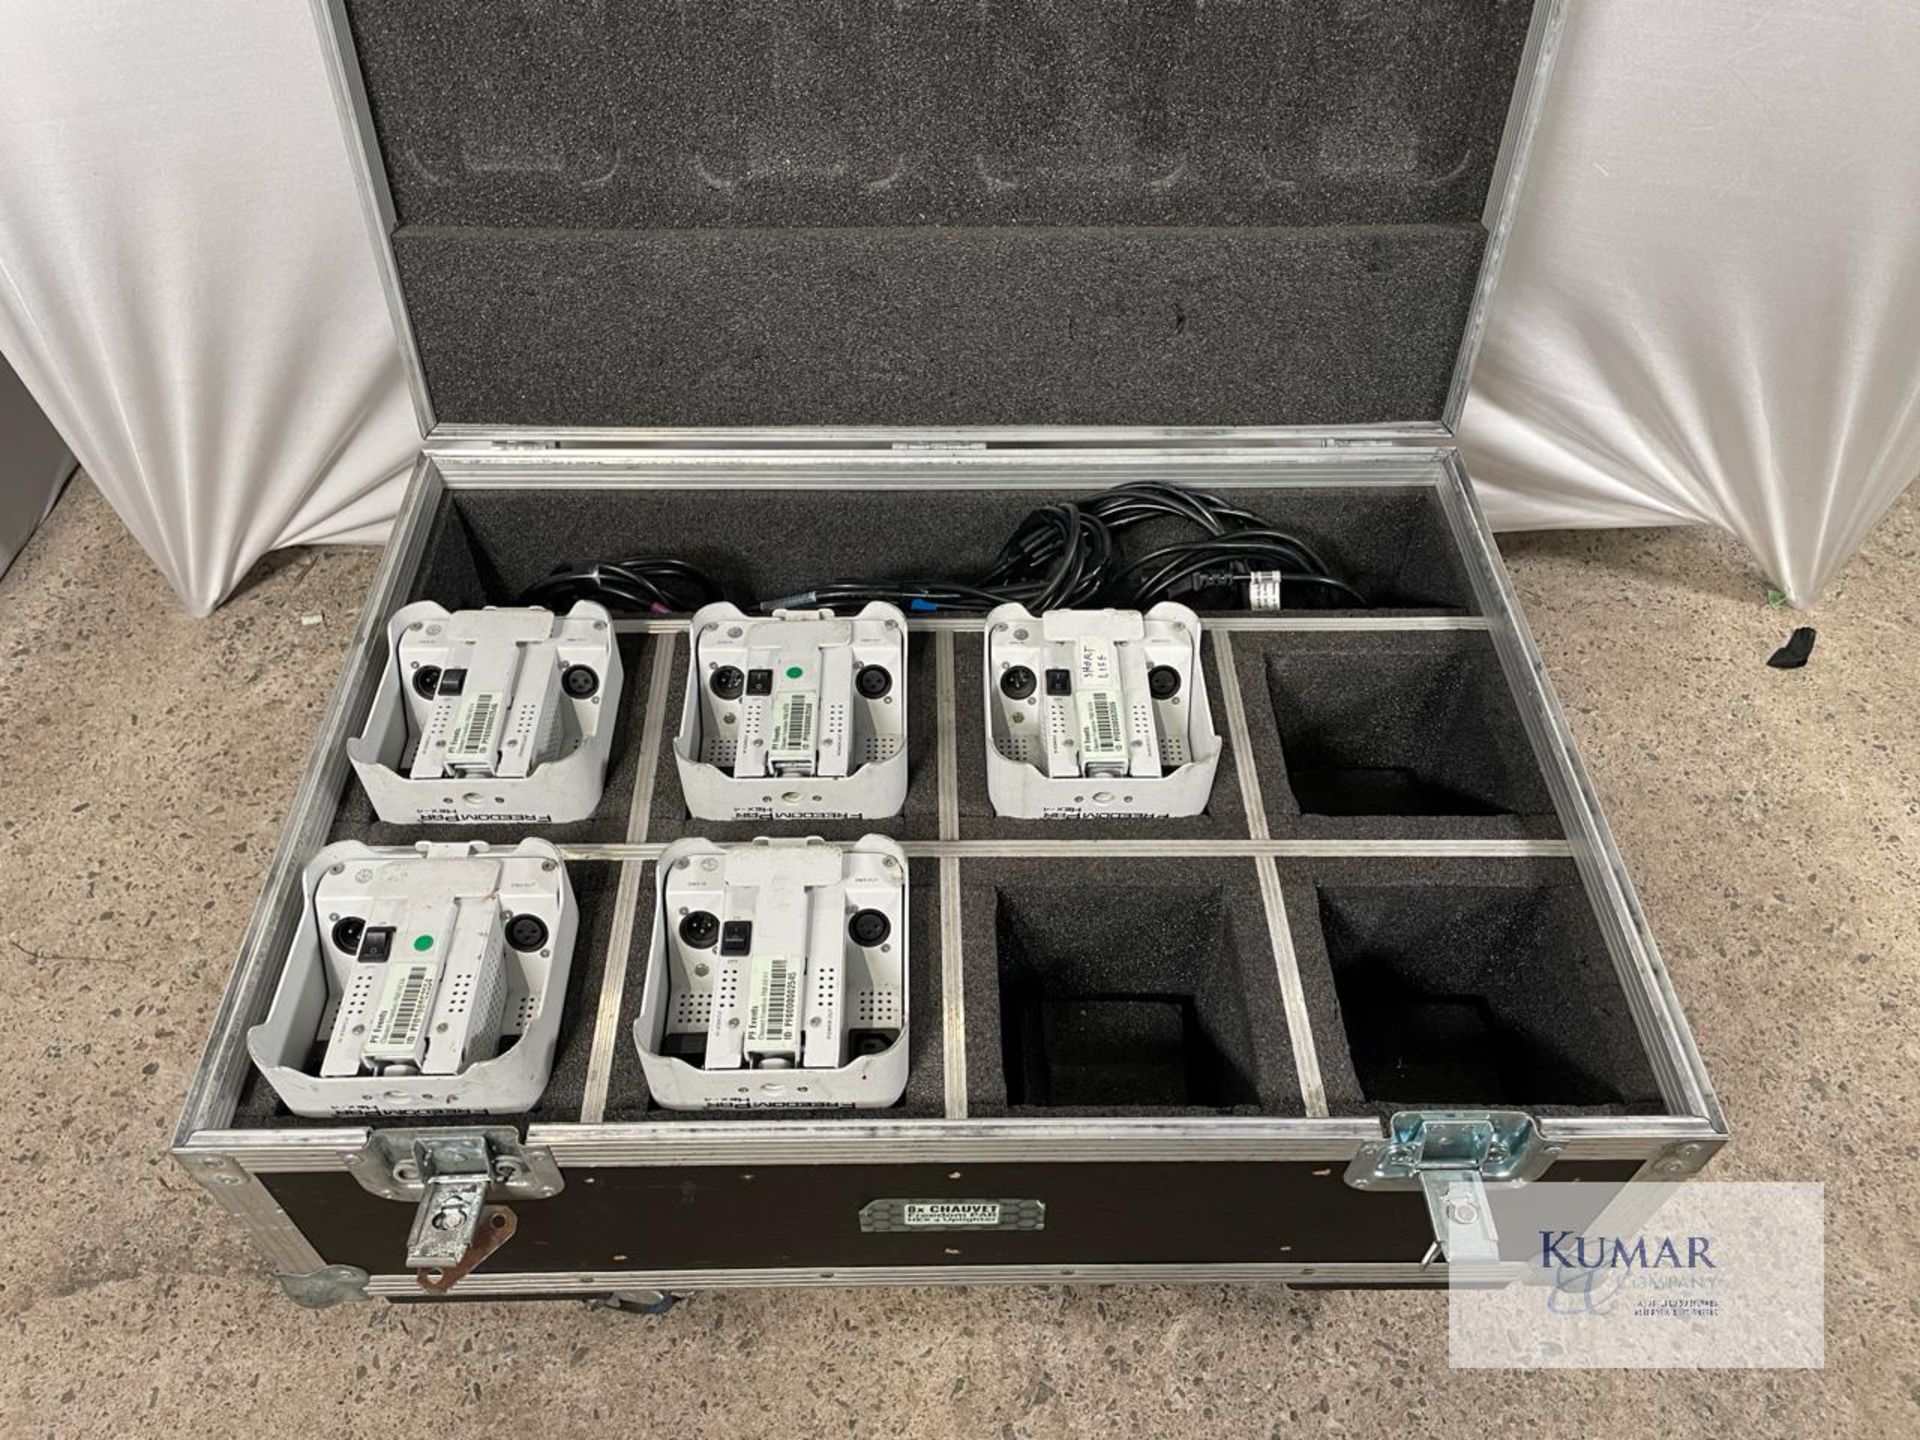 5x Chauvet Freedom PAR HEX4 Wireless Uplighter (White) in Flight Case 3x units have short battery